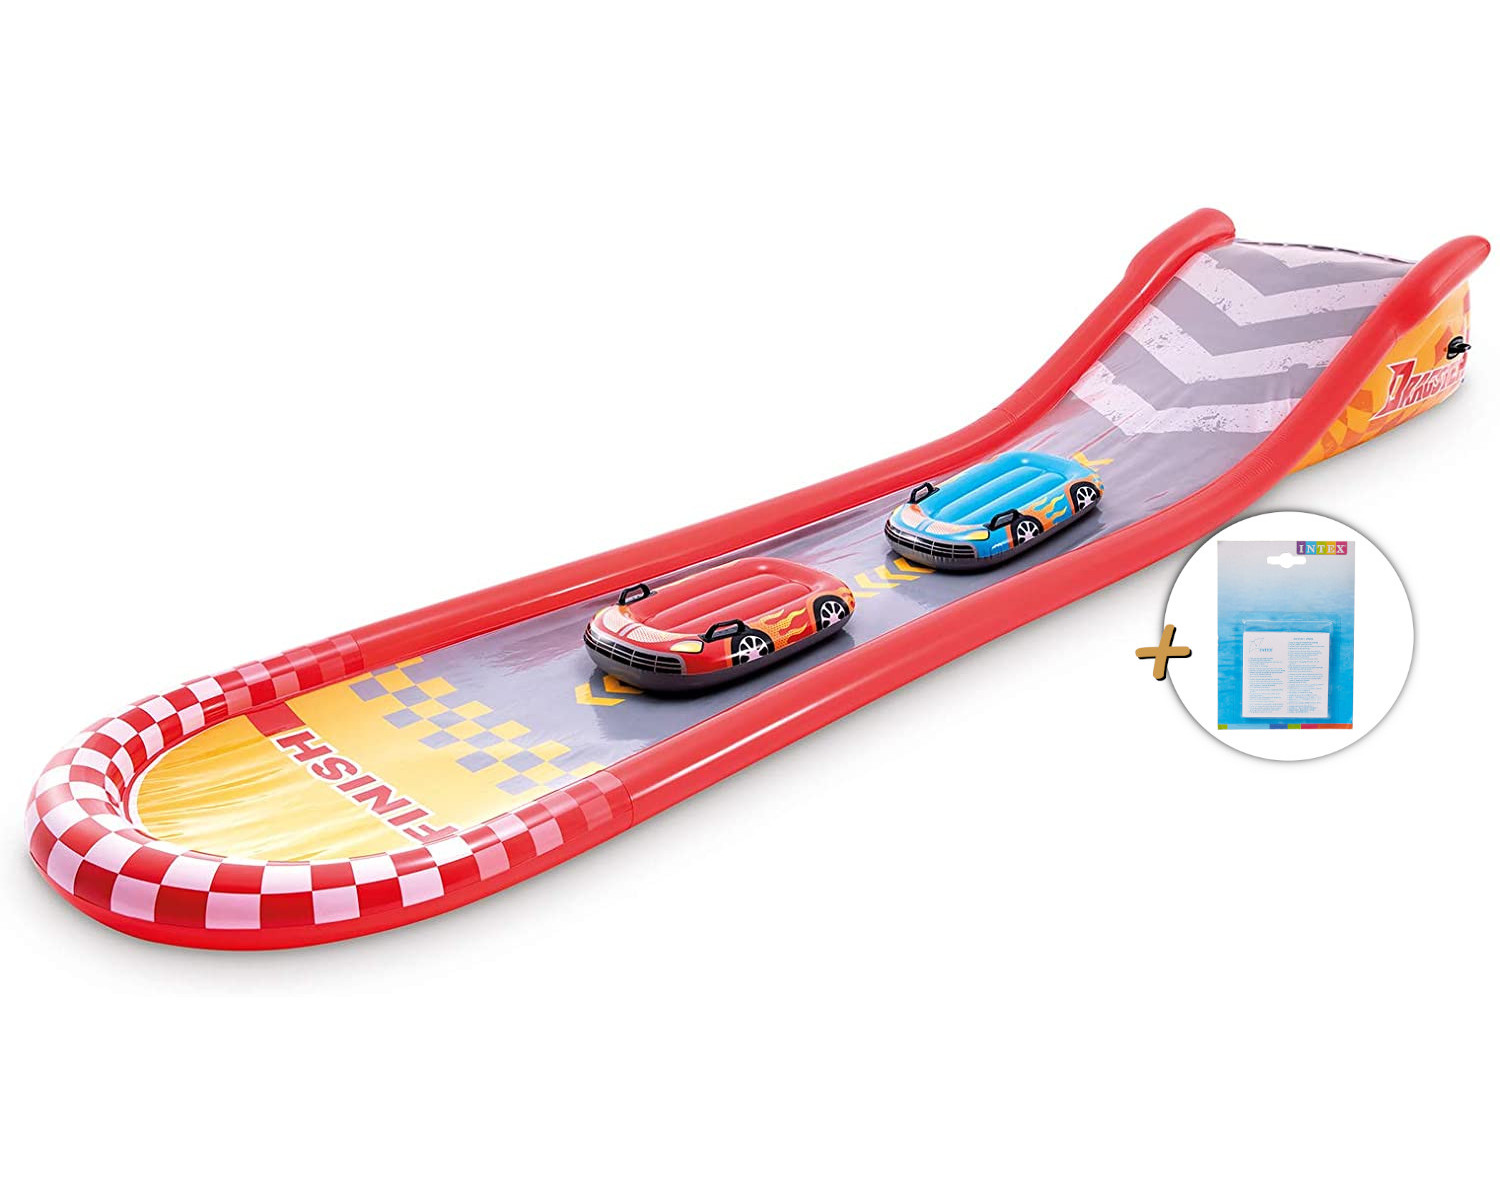 Wasserrutsche INTEX Racing extra + - Wasserspielzeug Reparaturflicken (561x119x76cm) Fun